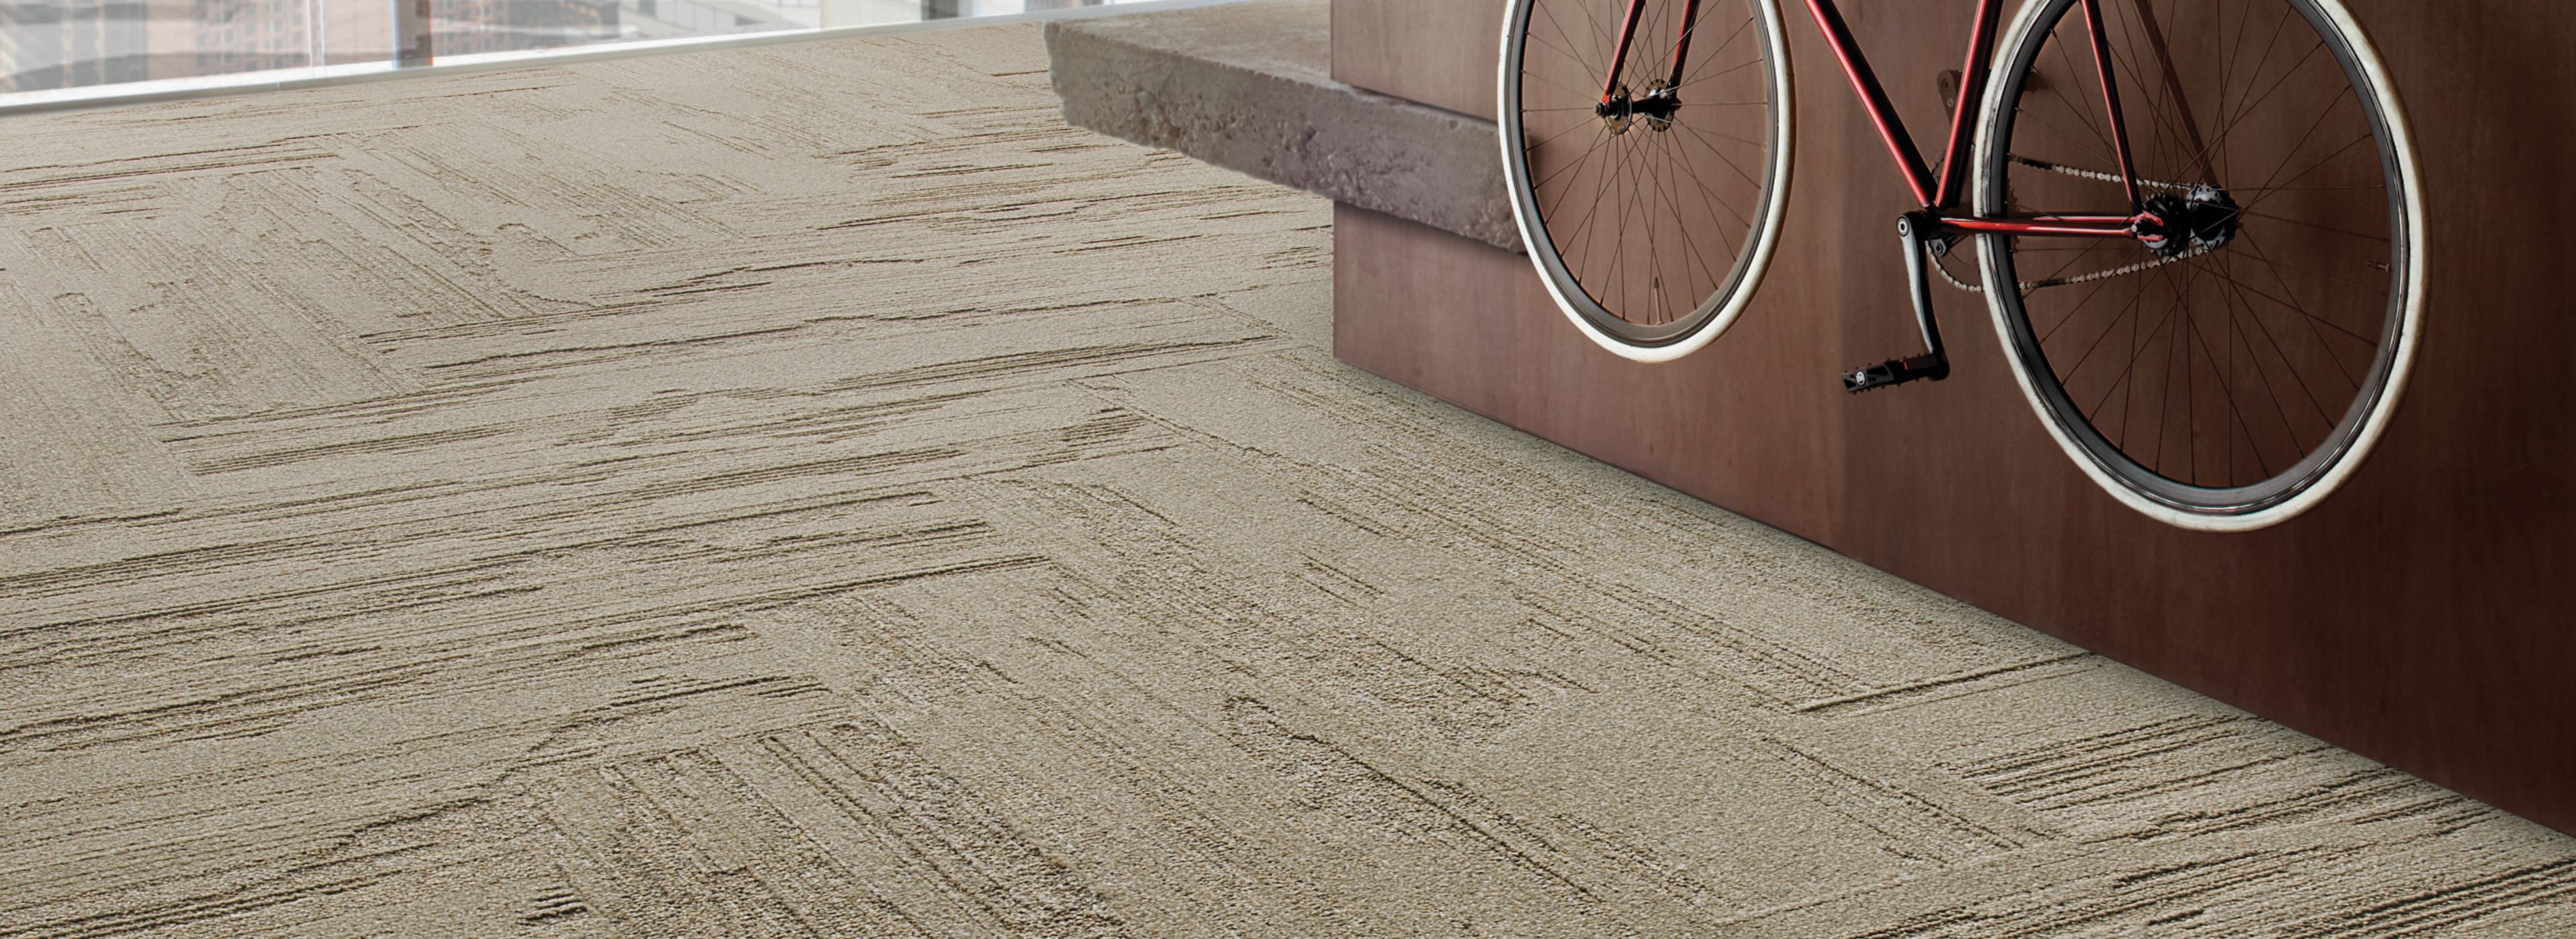 Interface UR501 plank carpet tile in office common area with bike  imagen número 1